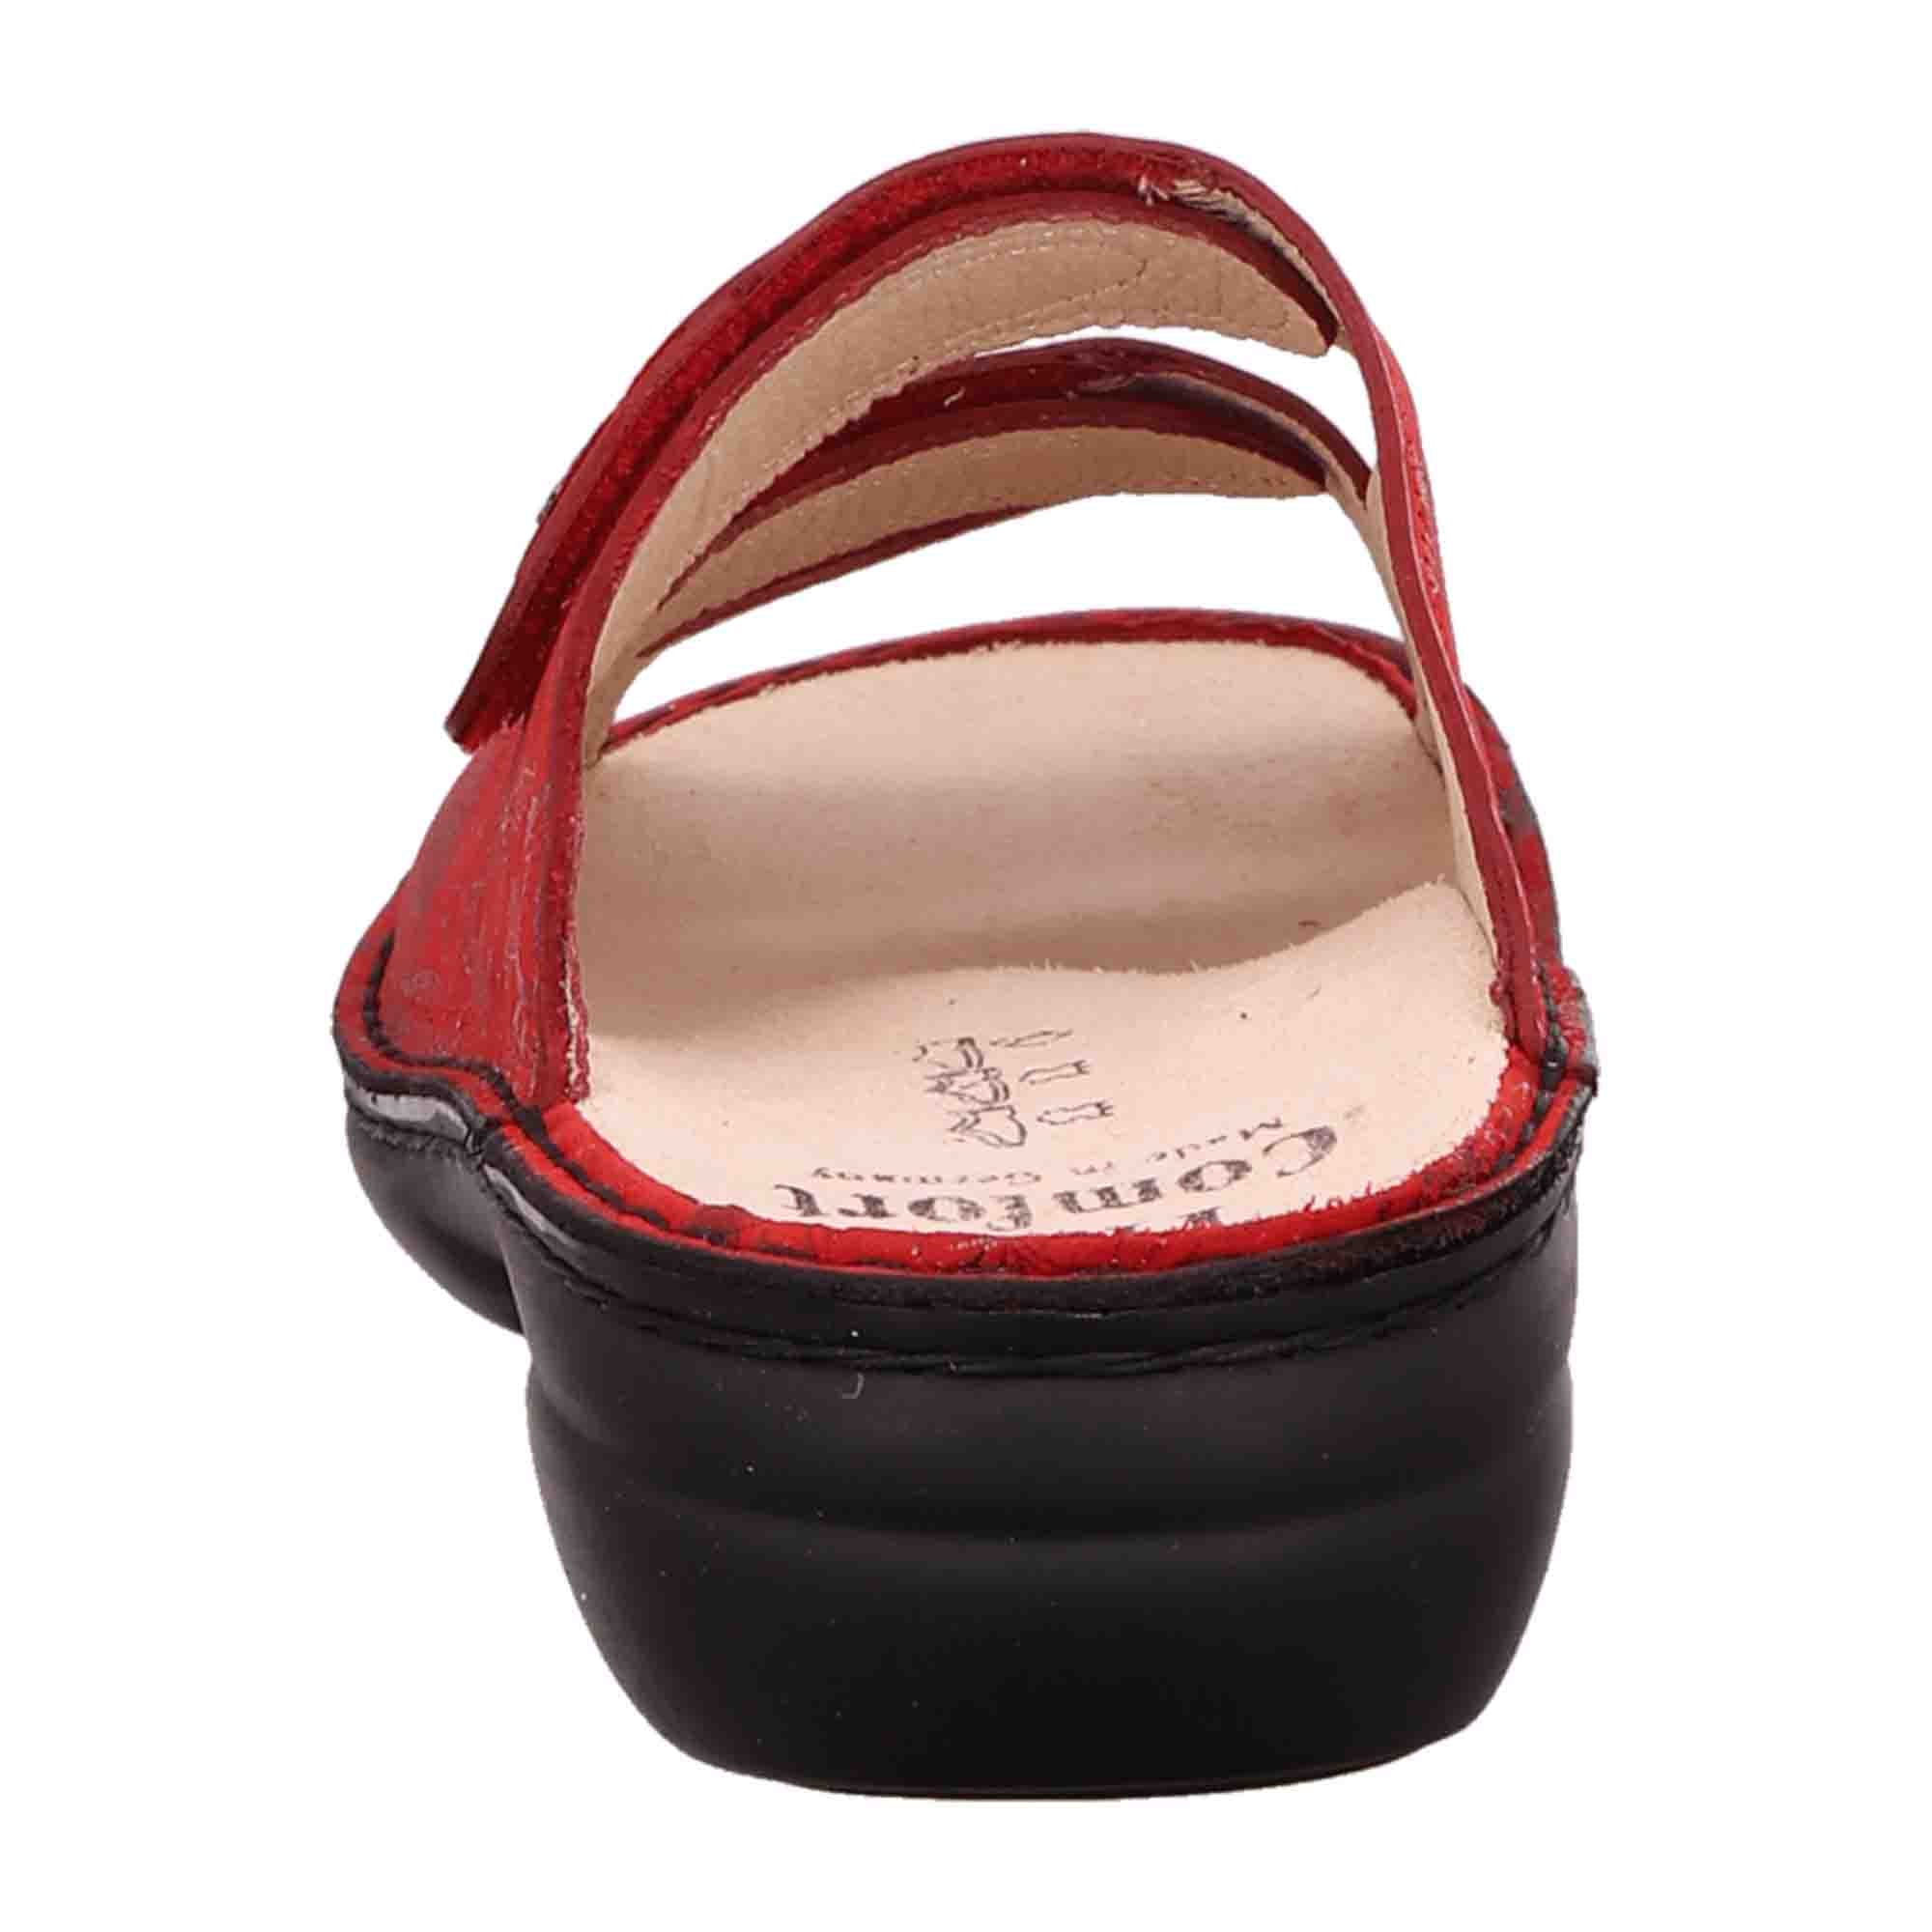 Finn Comfort Kos Women's Red Sandals - Stylish & Comfortable